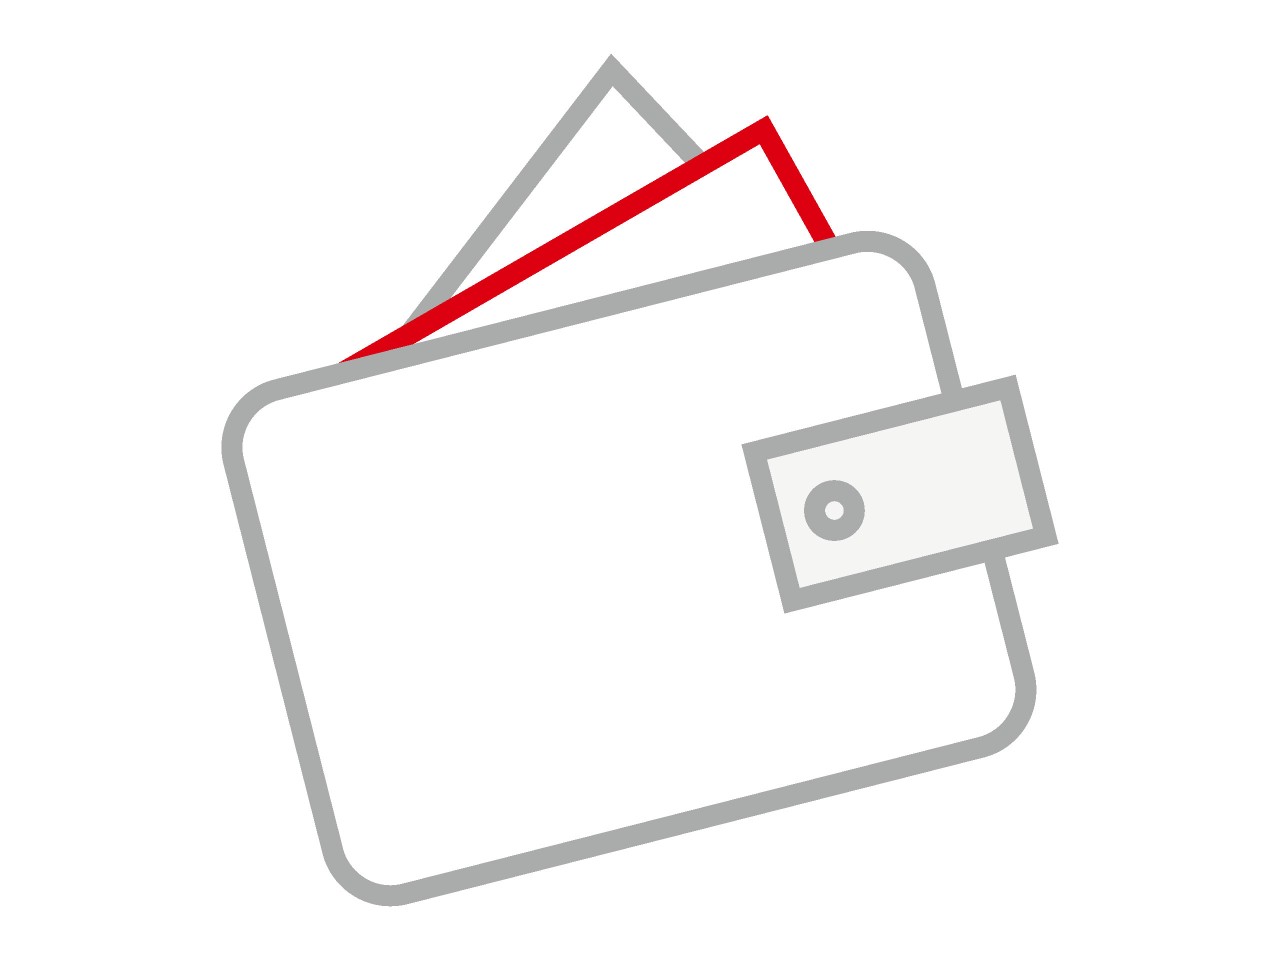 a wallet icon